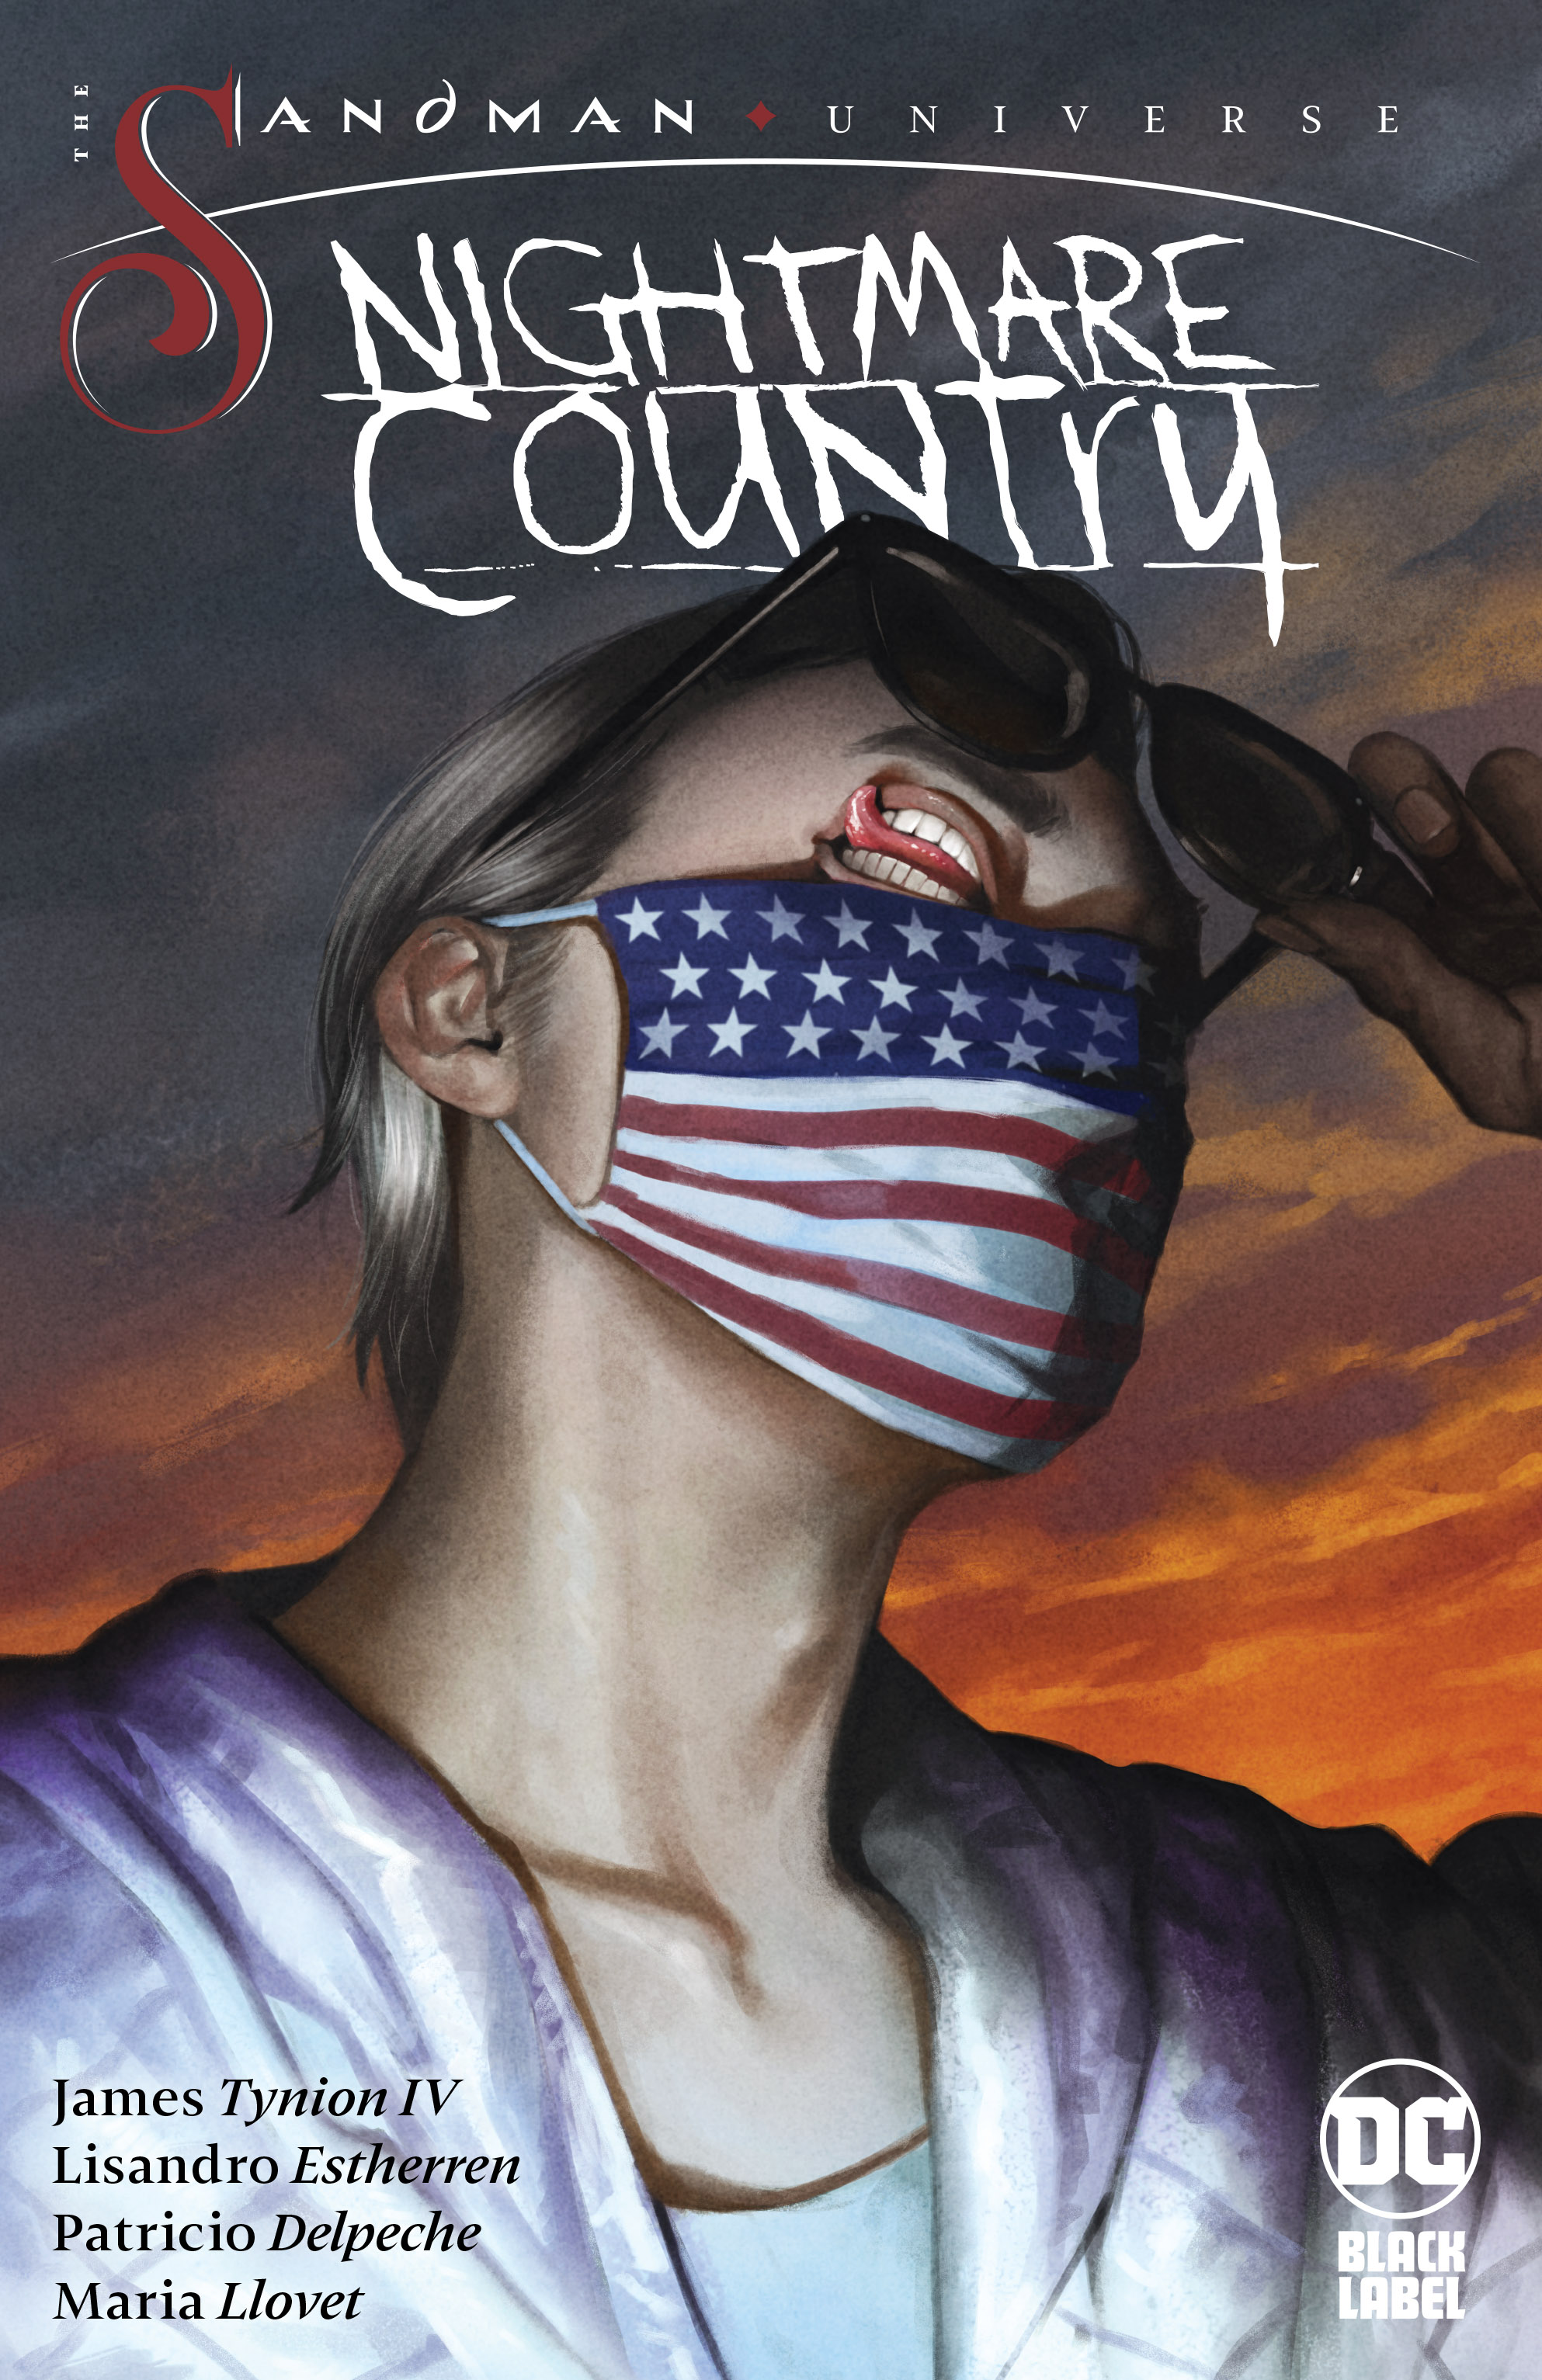 Sandman Universe Nightmare Country Graphic Novel Volume 1 Direct Market Exclusive Variant 